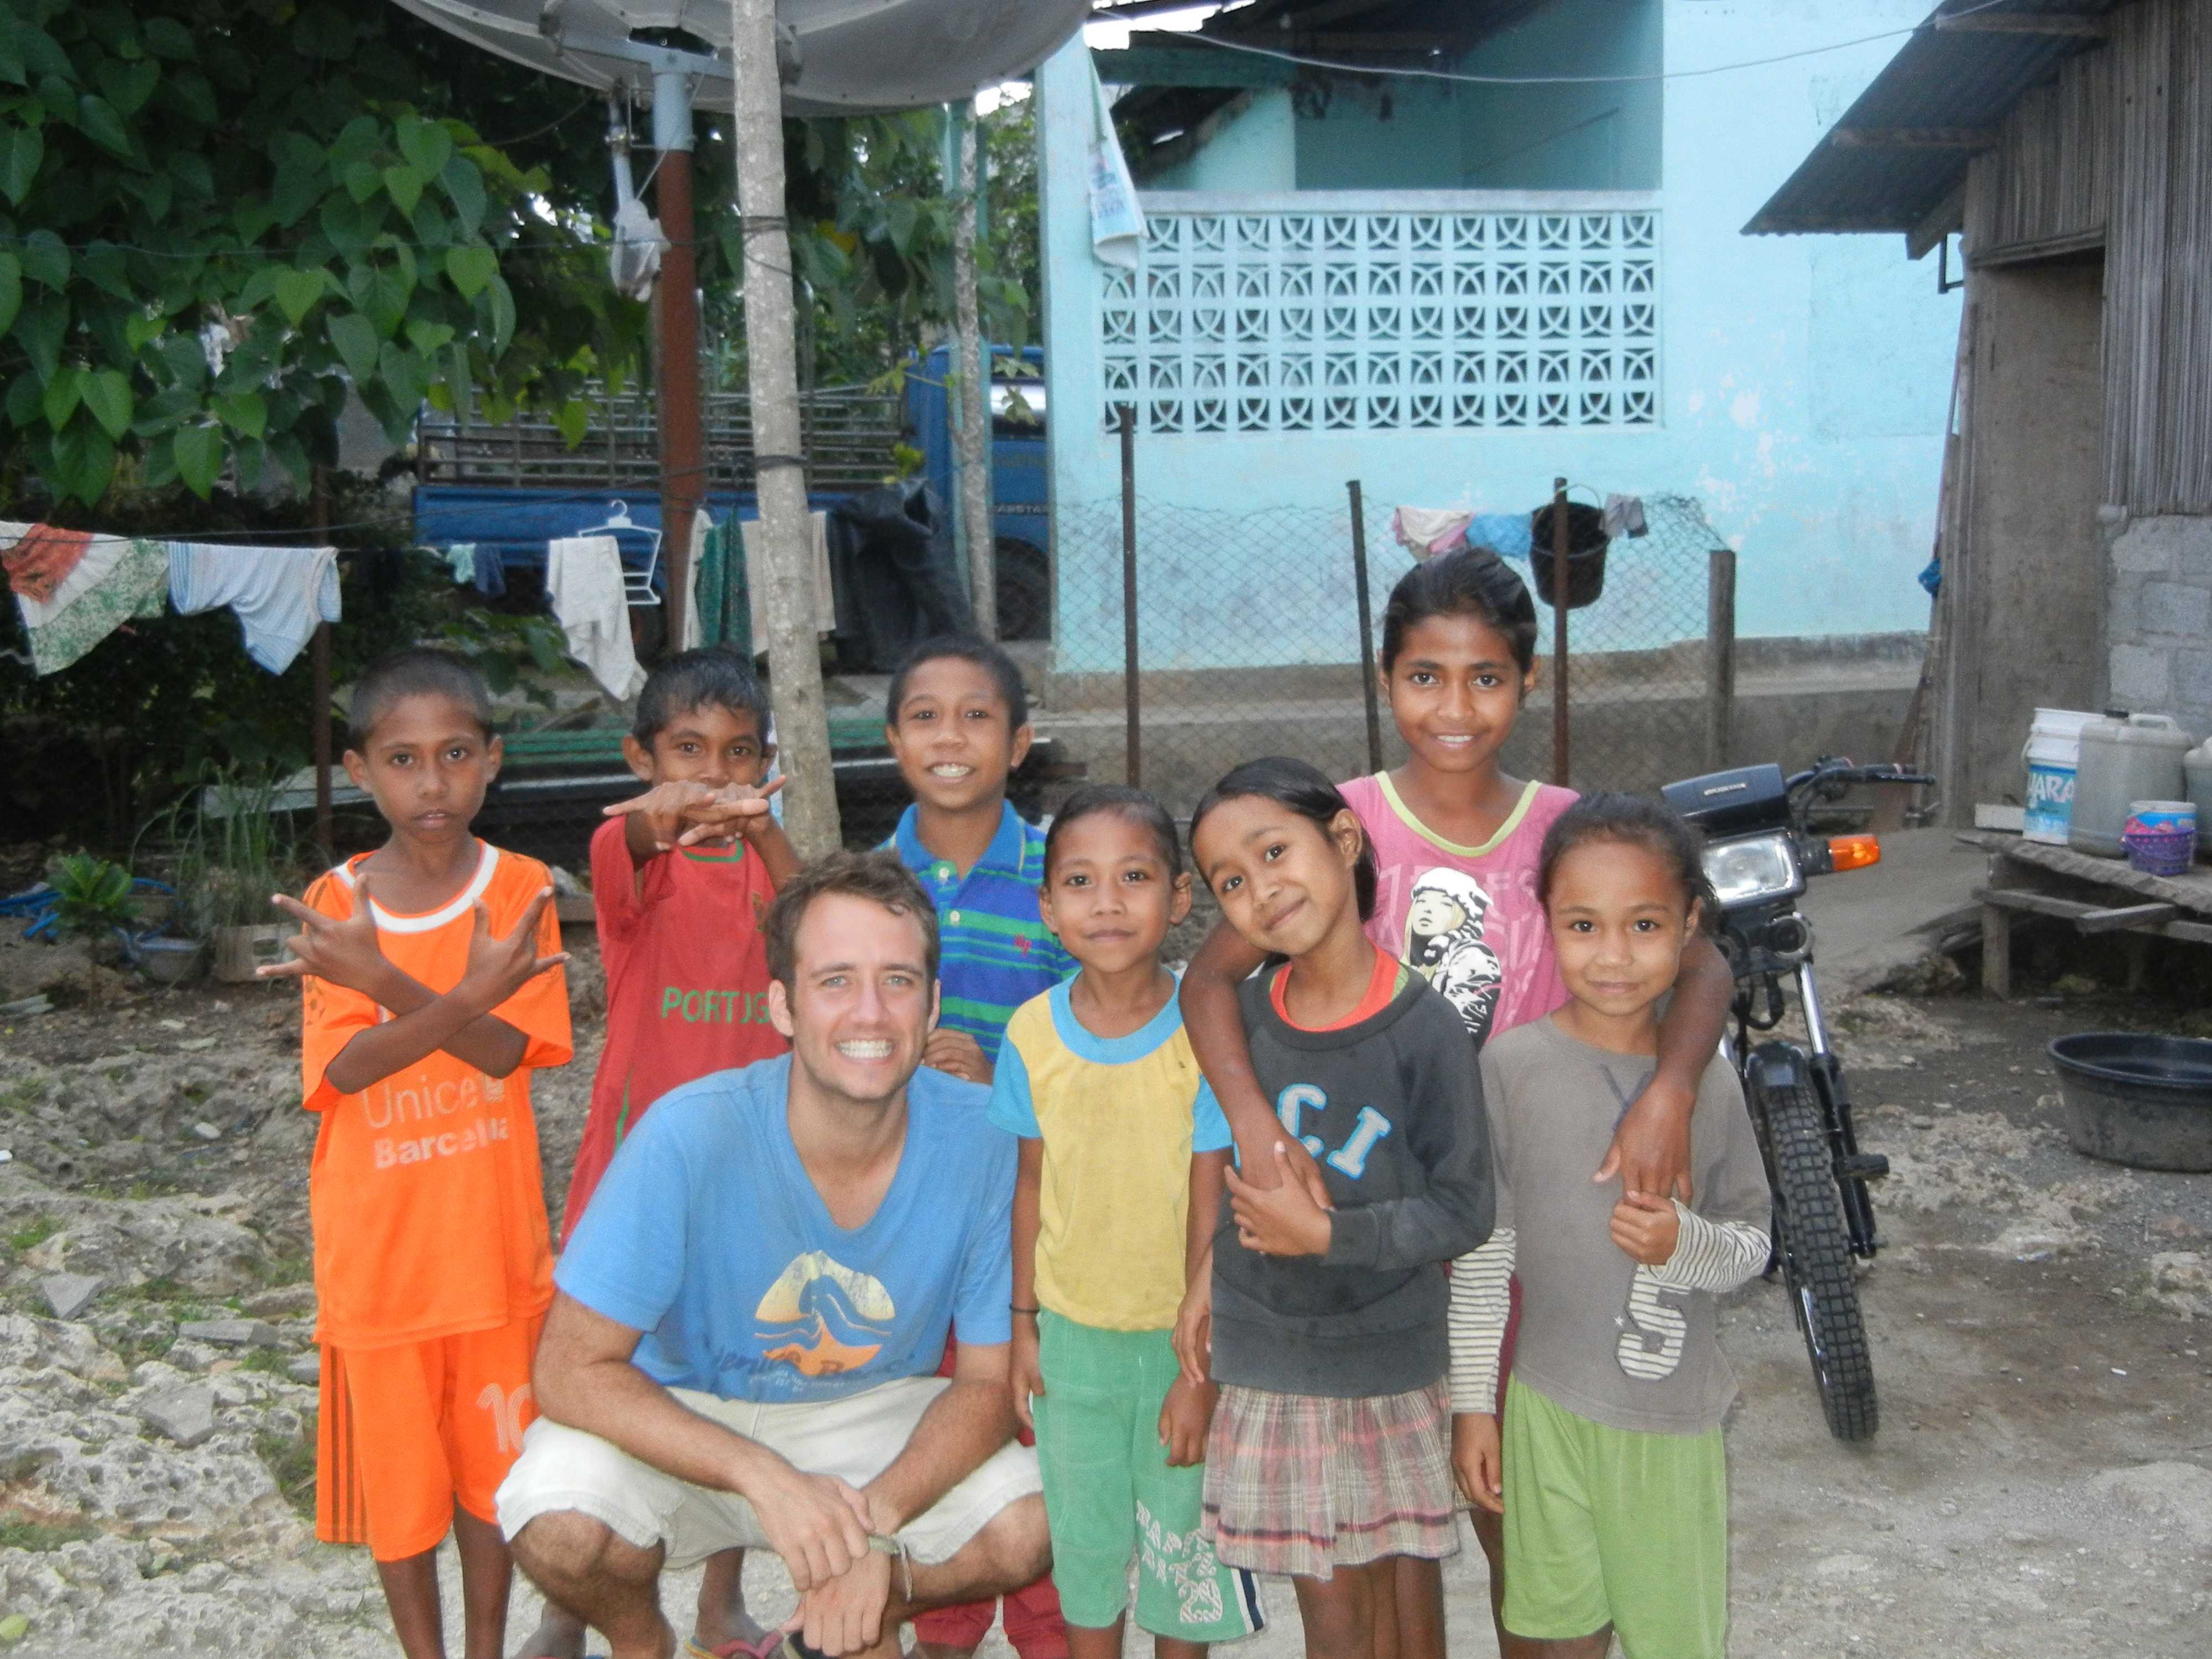 Palms Australia volunteer Heath Thompson with local kids in Timor-Leste